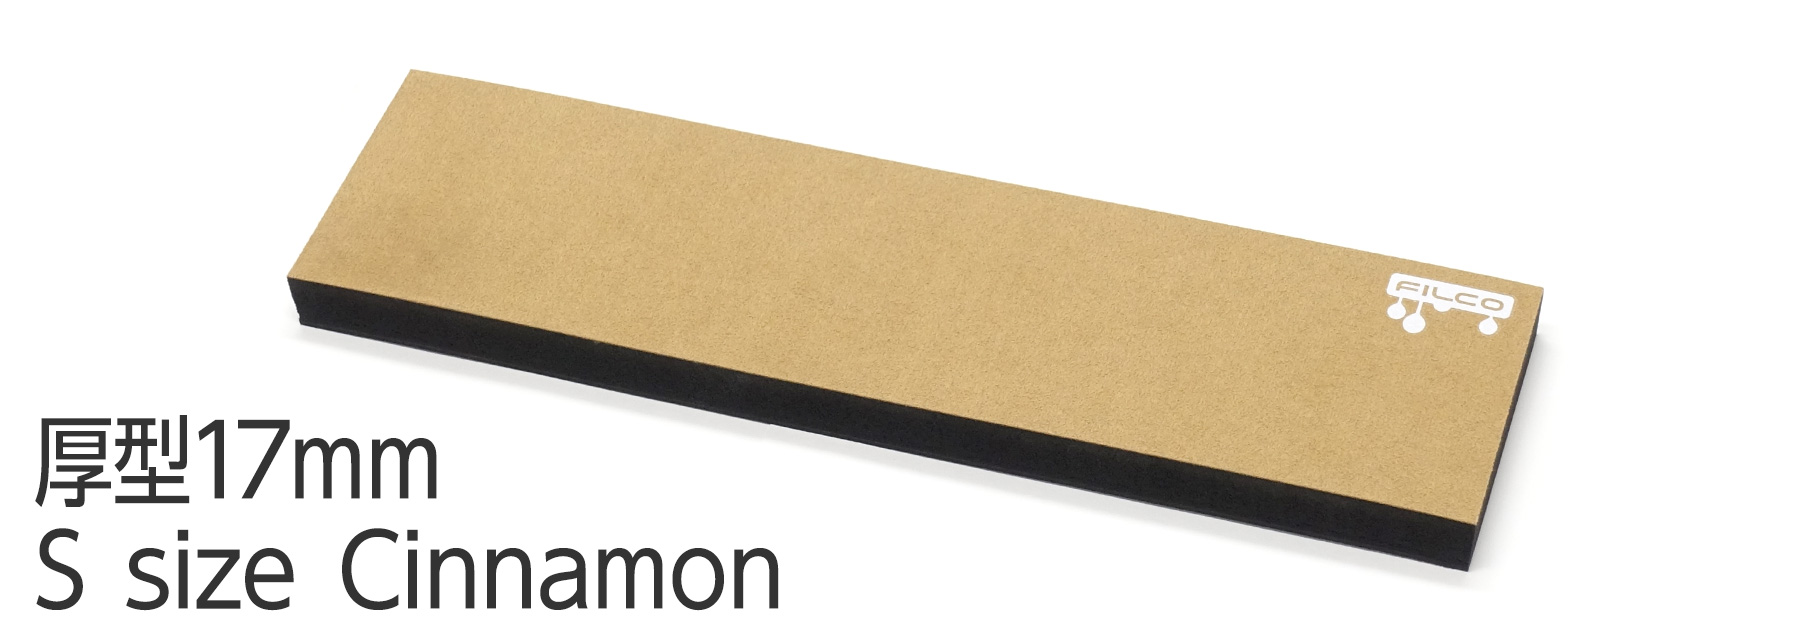 FILCO Majestouch Wrist Rest "Macaron" 厚型17mm・Sサイズ・Cinnamon